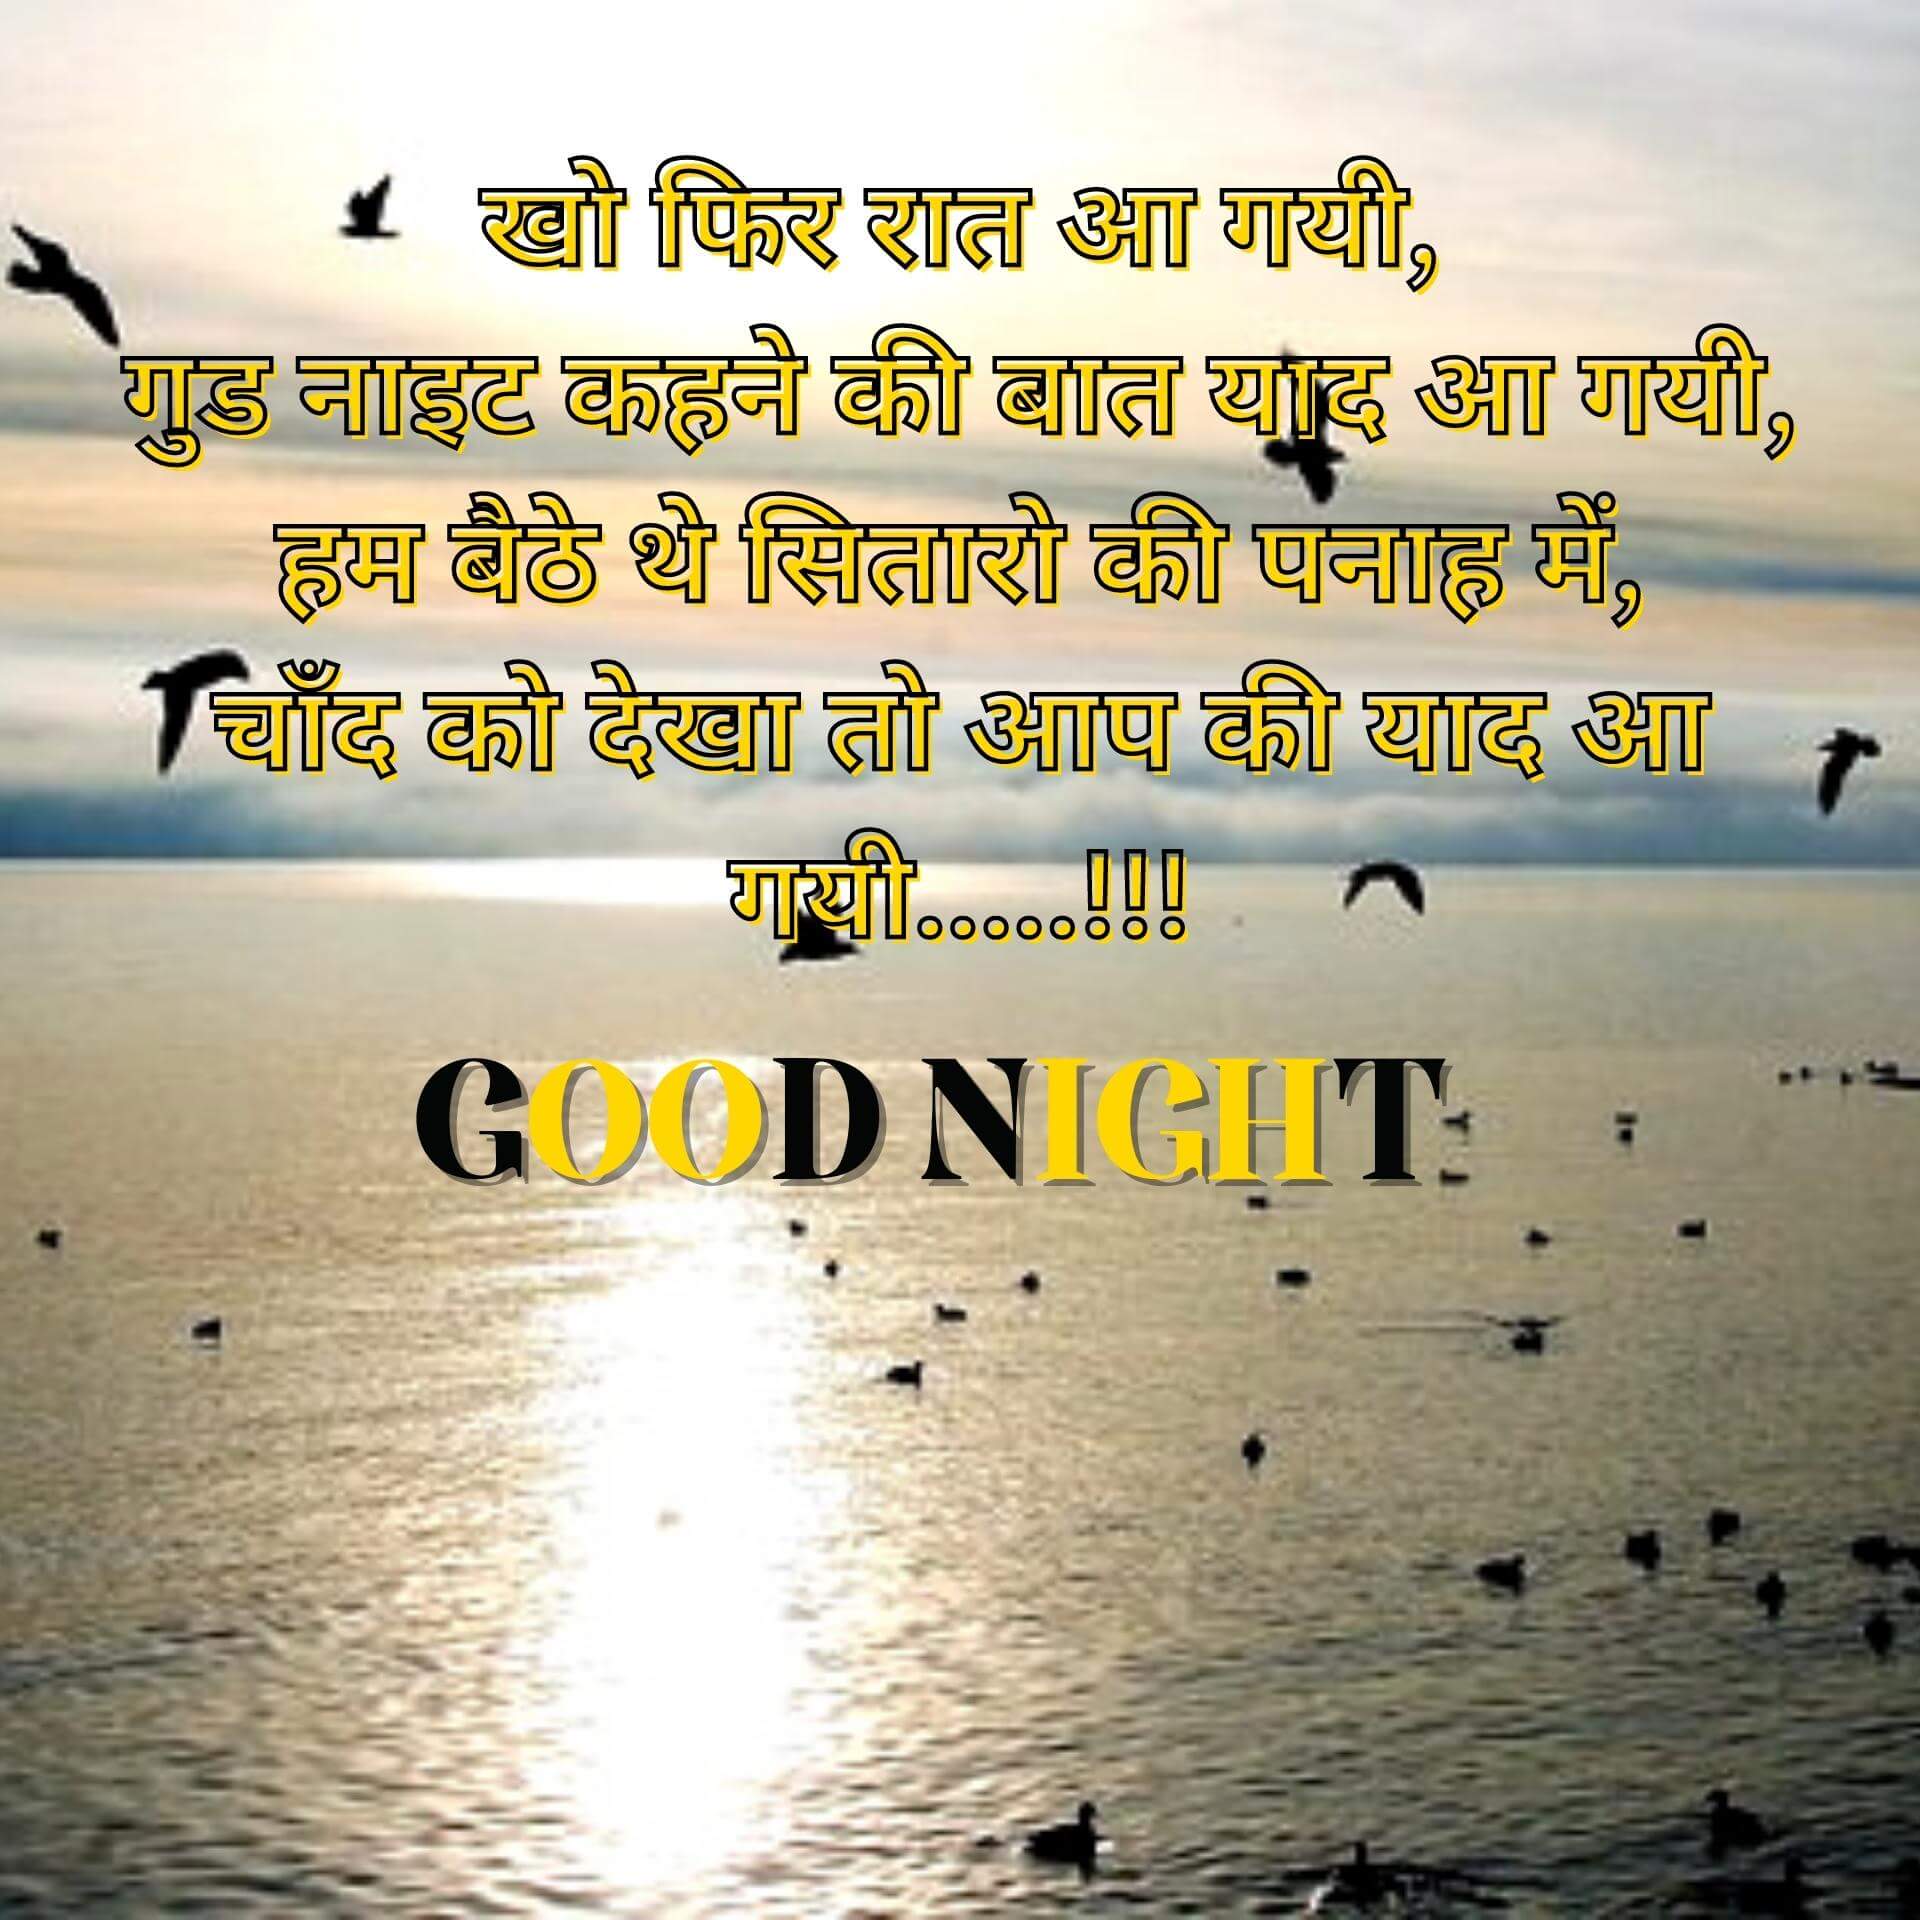 Hindi Shayari Good Night Pics Download